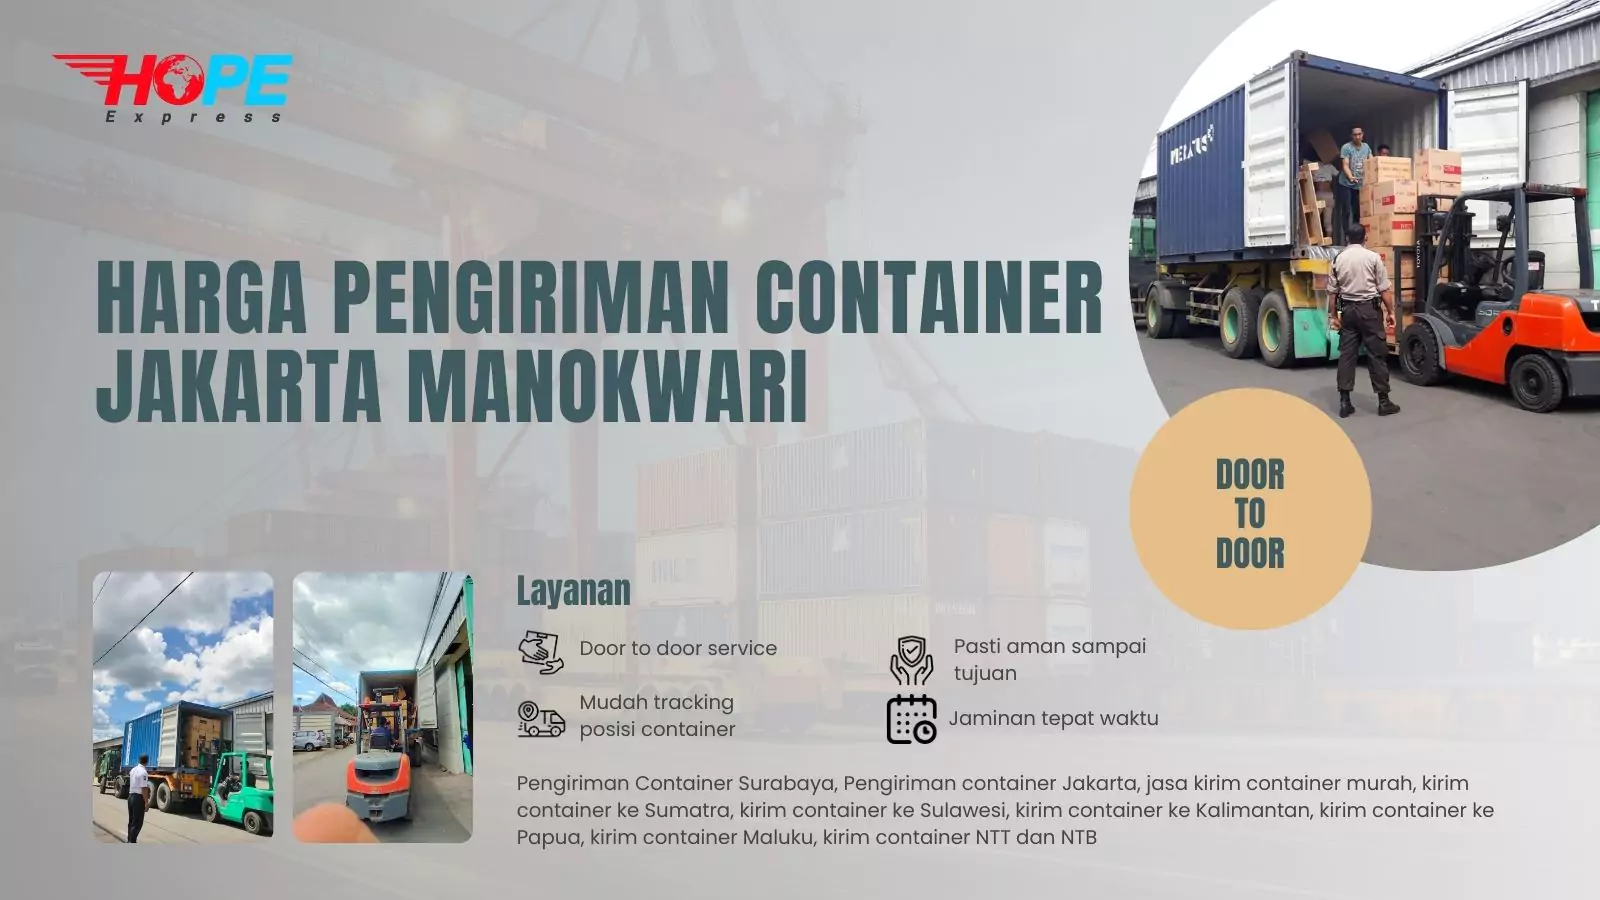 Harga Pengiriman Container Jakarta Manokwari